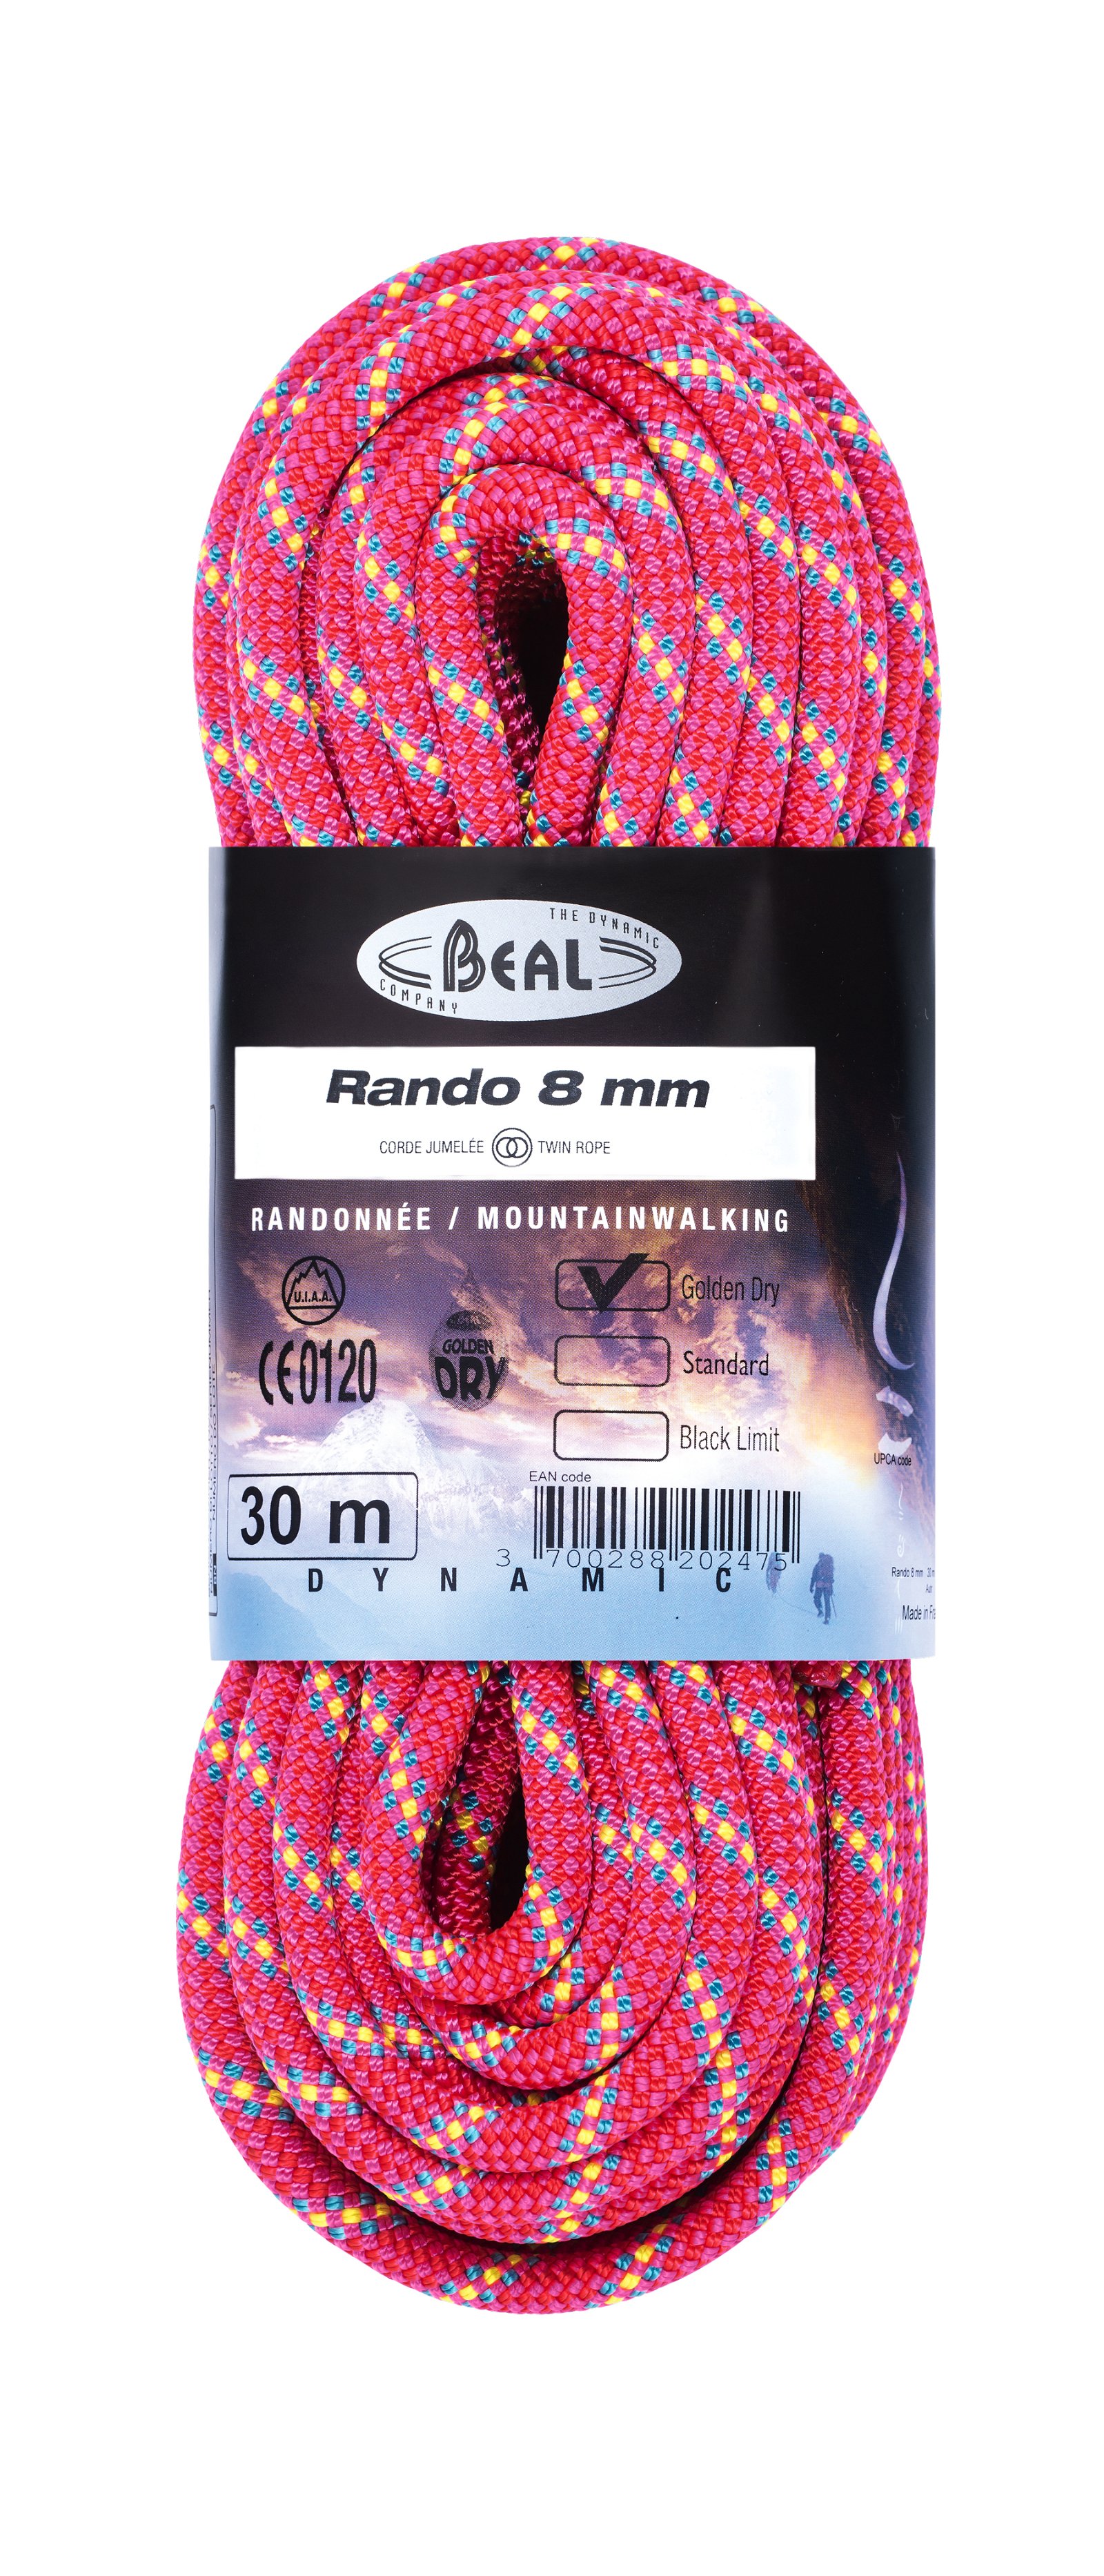 Beal Rando 8mm